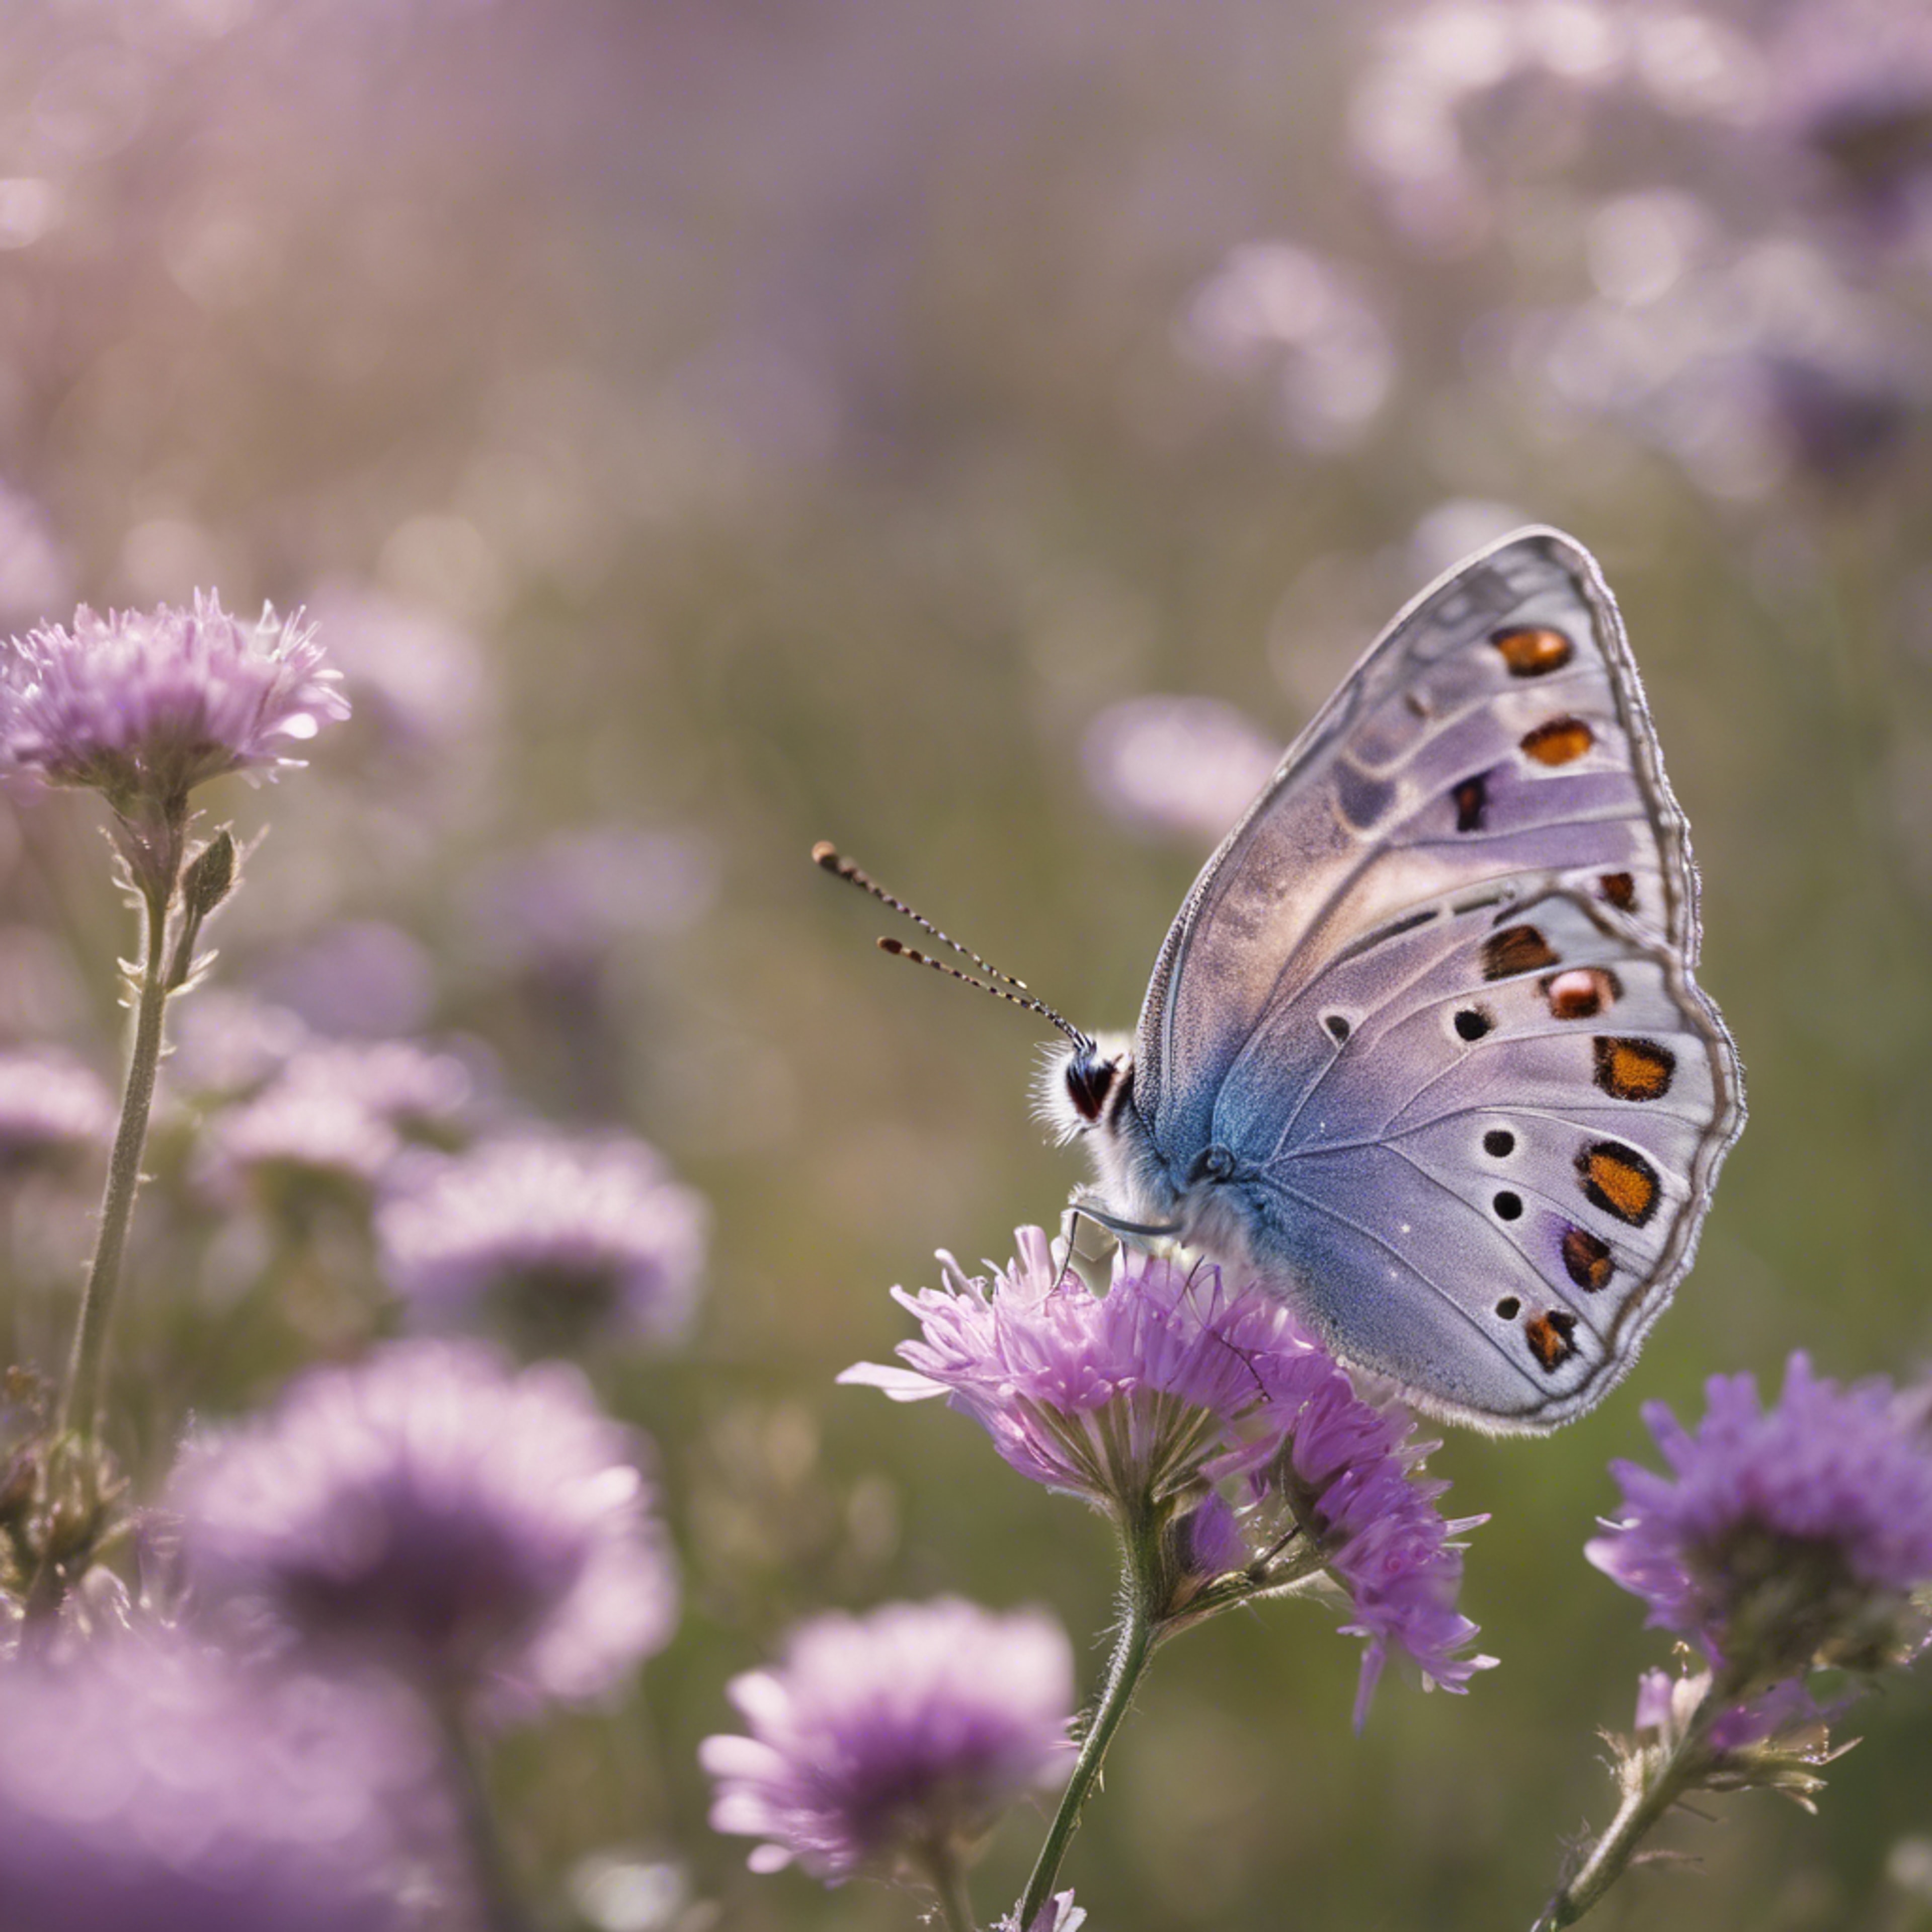 A playful light purple butterfly fluttering freely amidst wildflowers.壁紙[992811f2a8e14925b1c6]